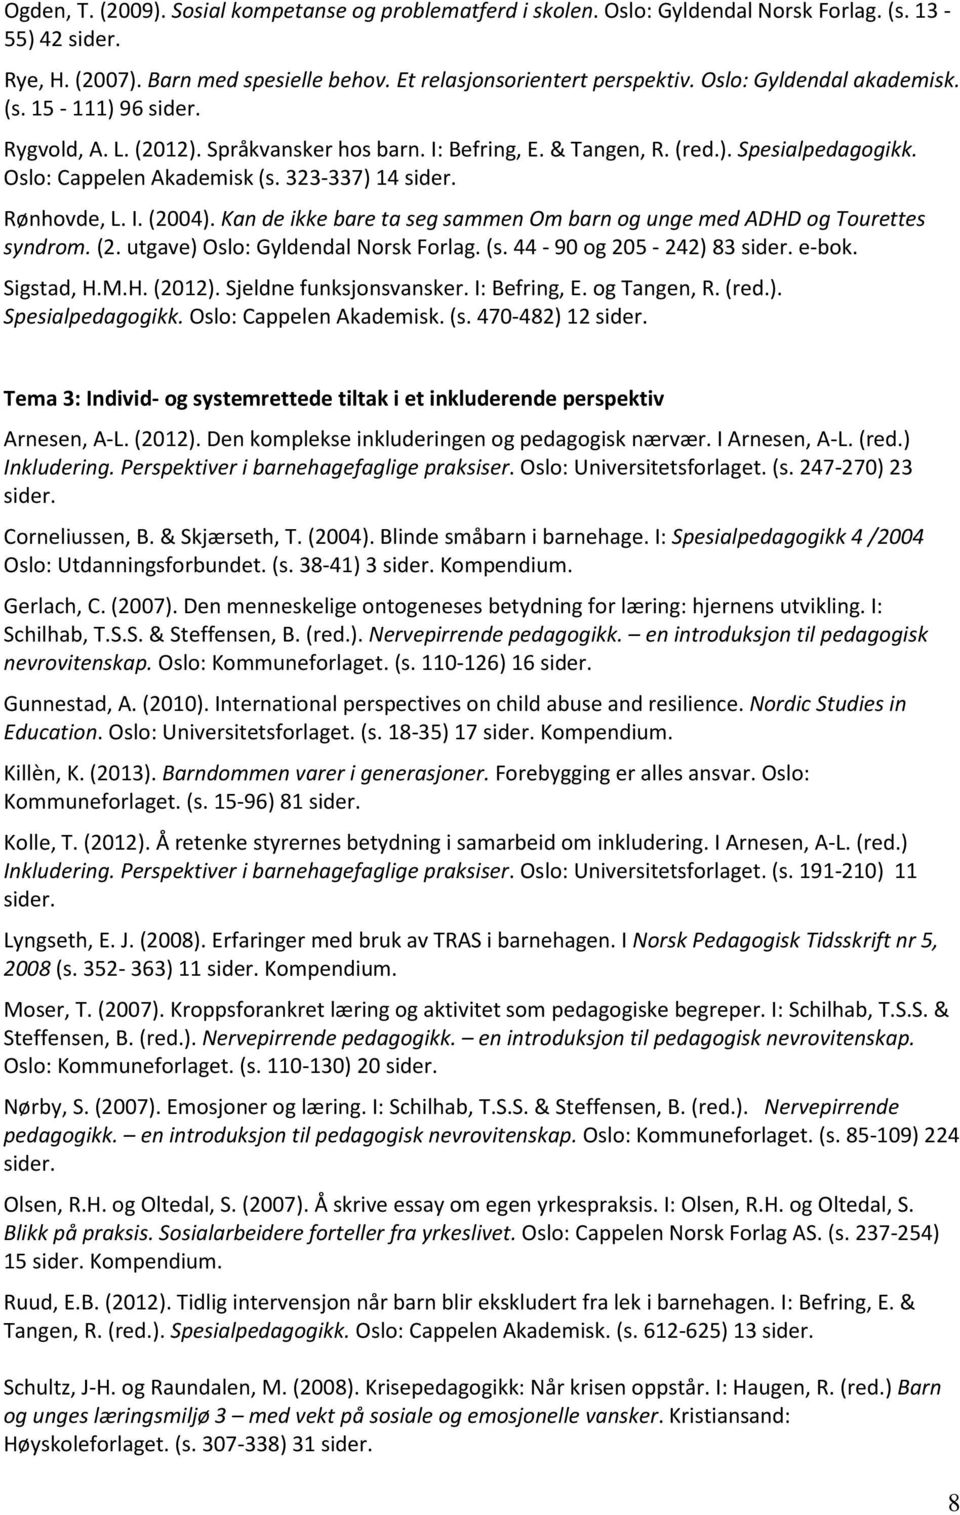 Rønhovde, L. I. (2004). Kan de ikke bare ta seg sammen Om barn og unge med ADHD og Tourettes syndrom. (2. utgave) Oslo: Gyldendal Norsk Forlag. (s. 44-90 og 205-242) 83 sider. e-bok. Sigstad, H.M.H. (2012).